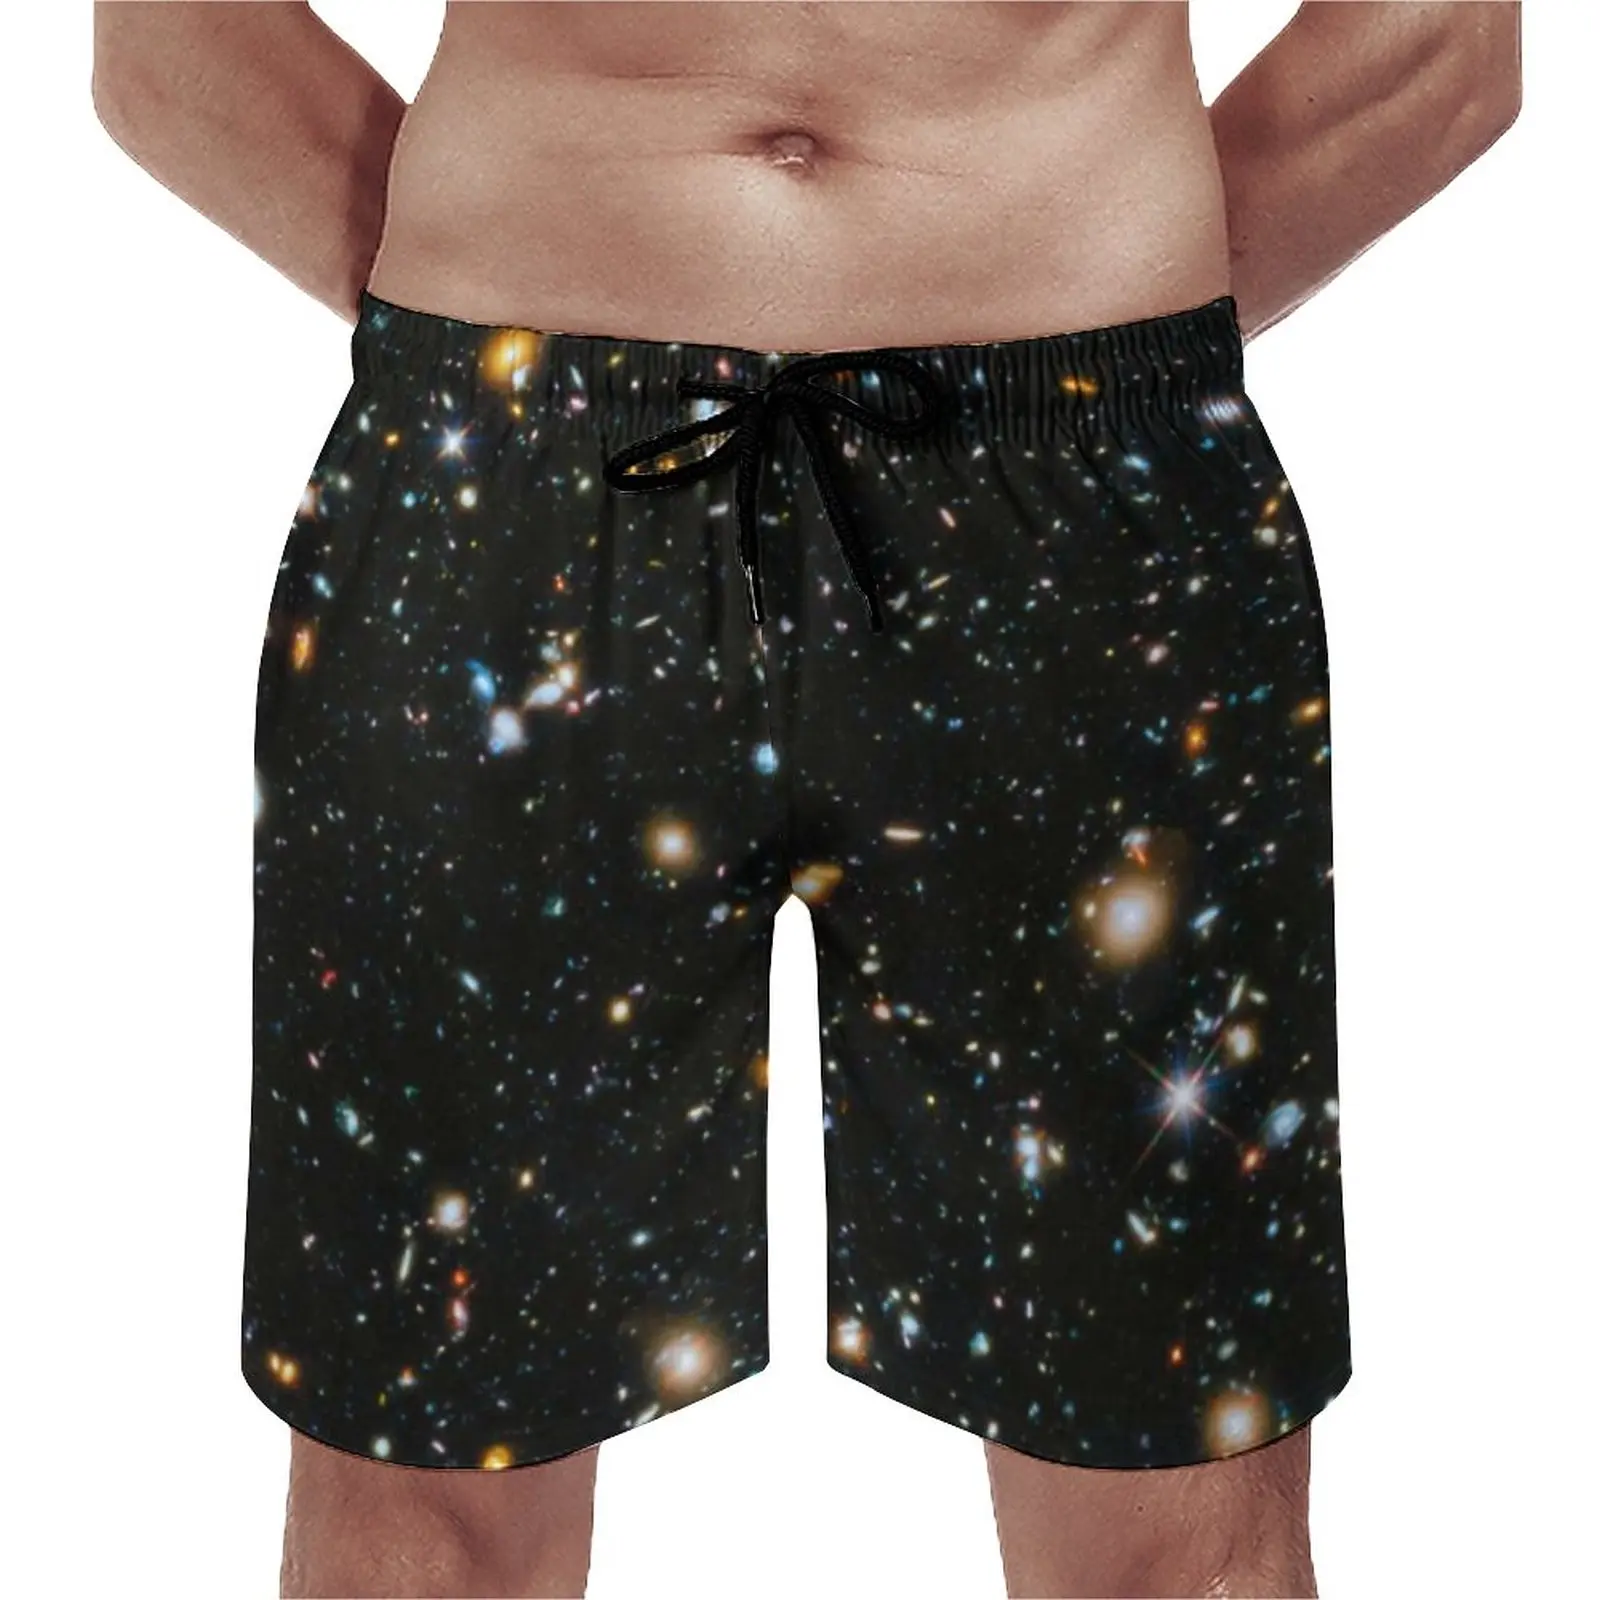 

Galaxy Star Board Shorts Artistic Stars Space Black Beach Shorts Elastic Waist Pattern Custom Swimming Trunks Plus Size